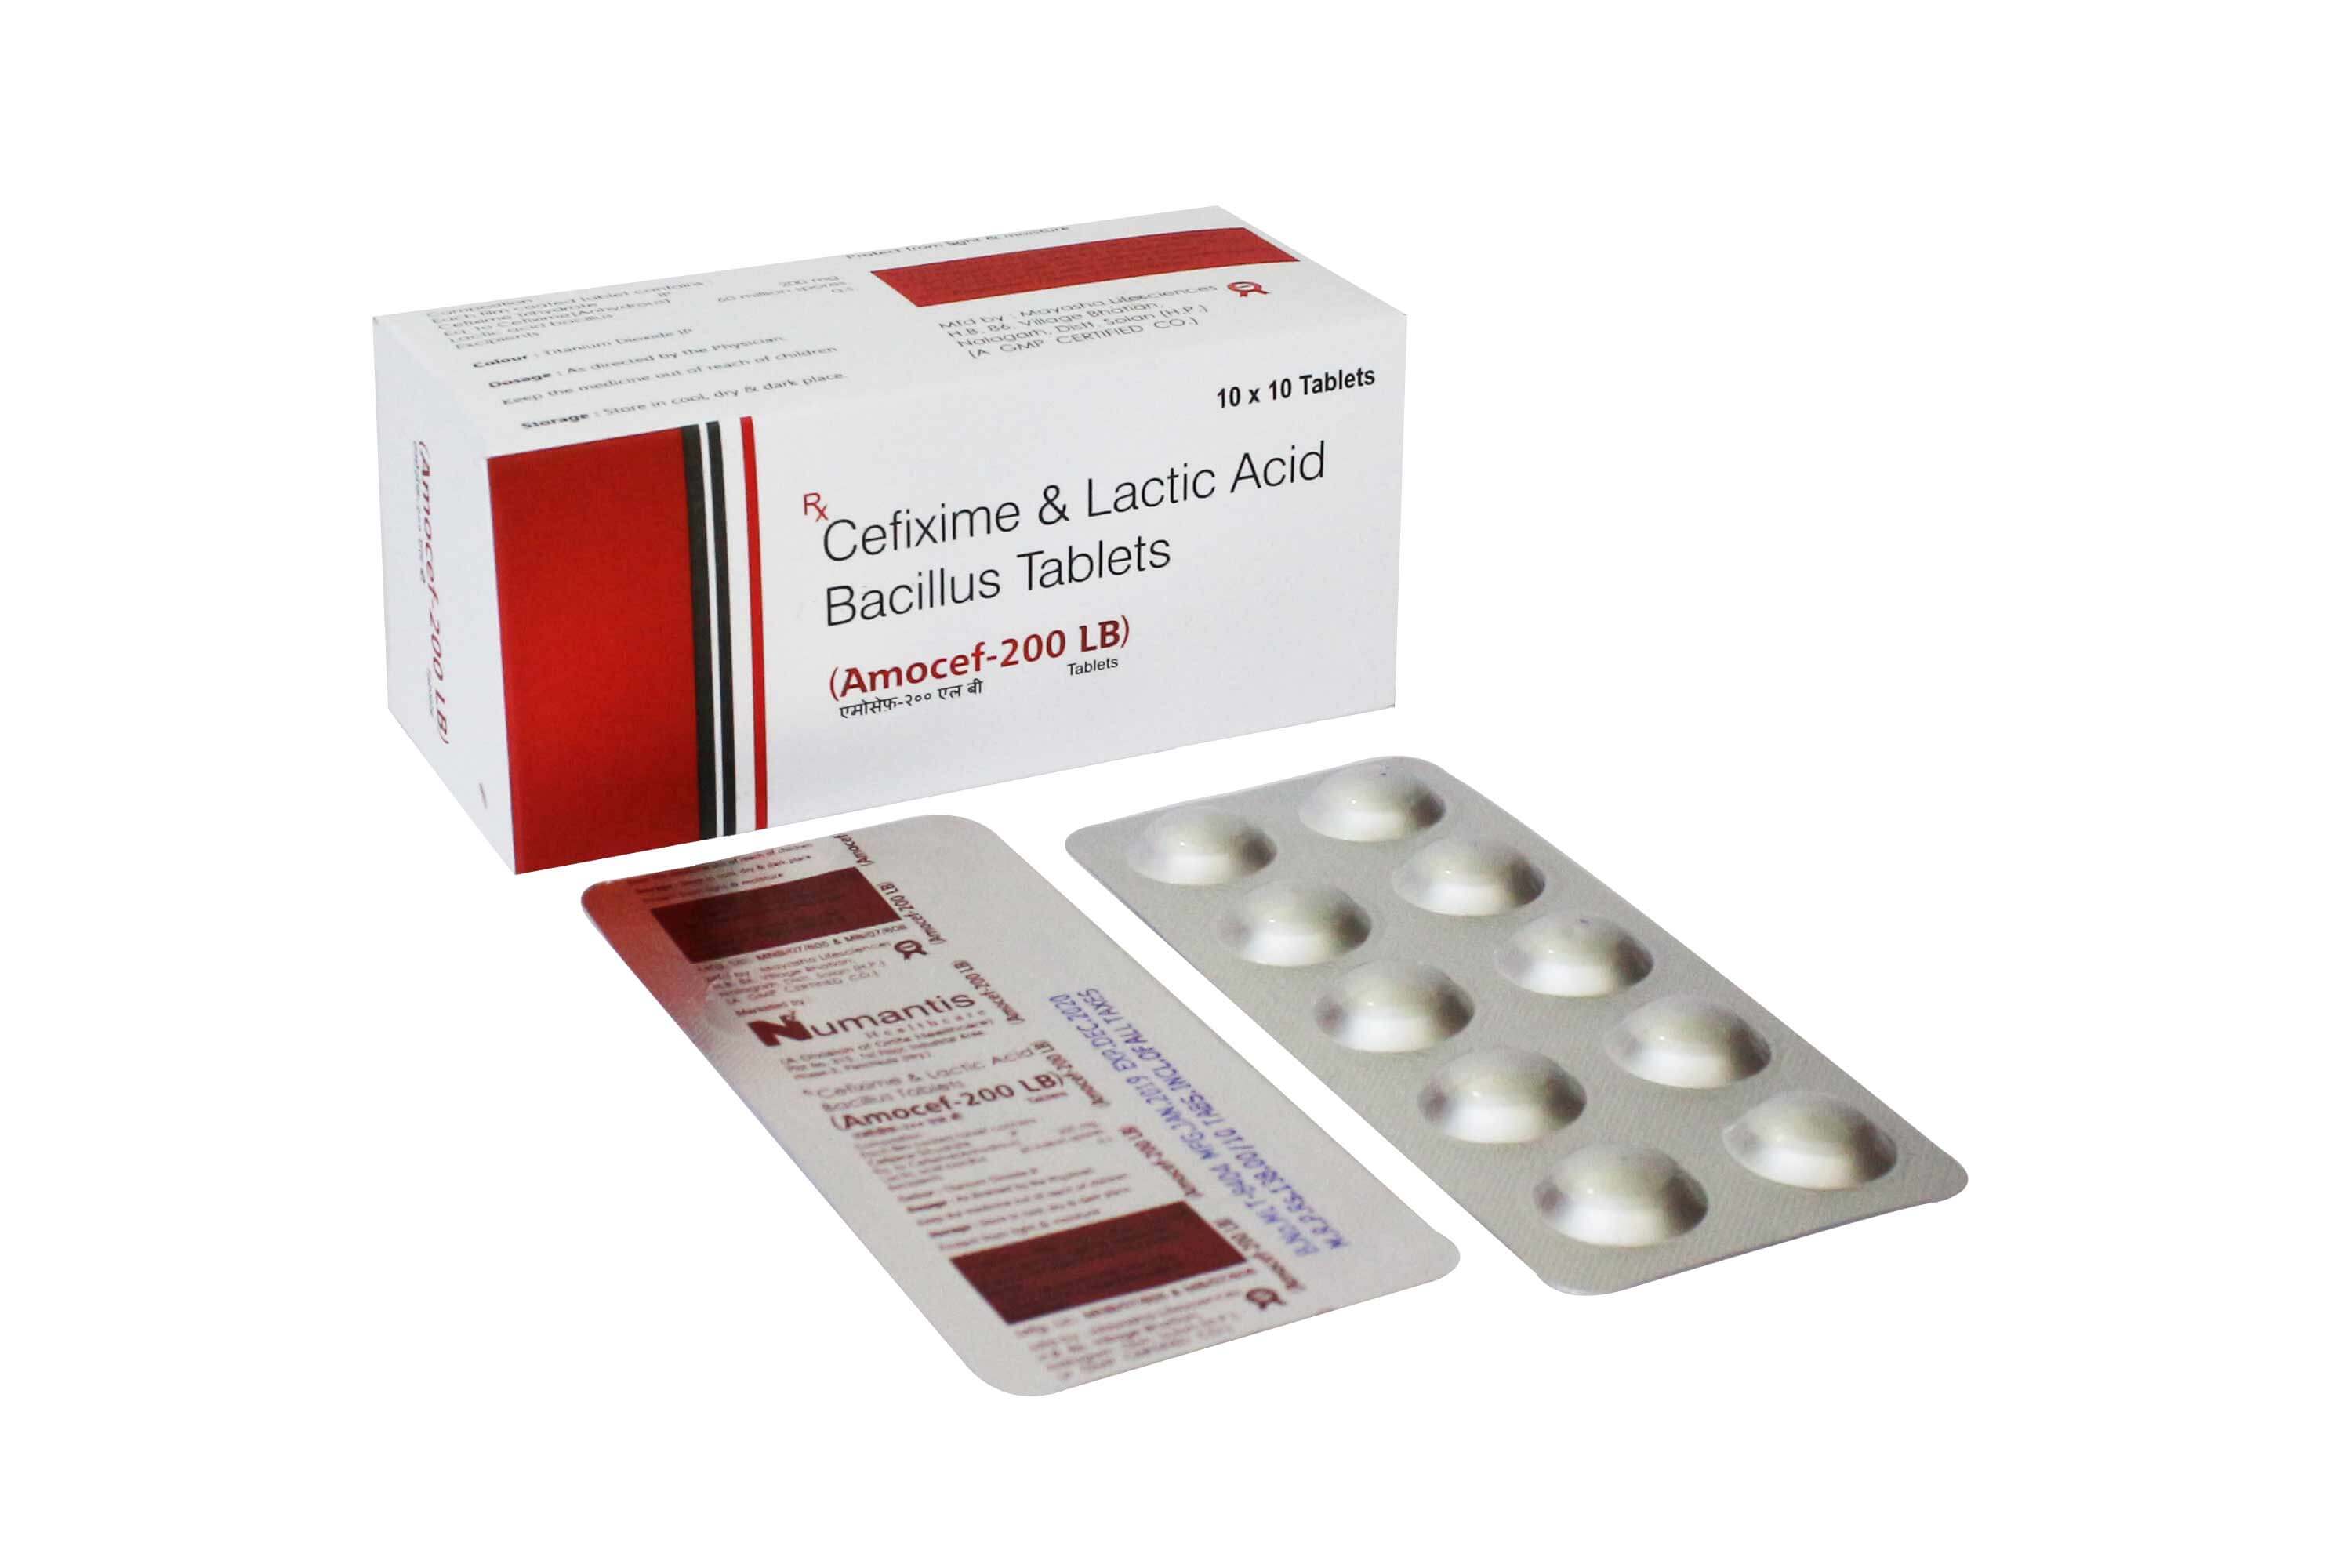 Product Name: Amocef 200 LB, Compositions of Amocef 200 LB are Cefixime & Lacti Acid Bacillus Tablets  - Numantis Healthcare